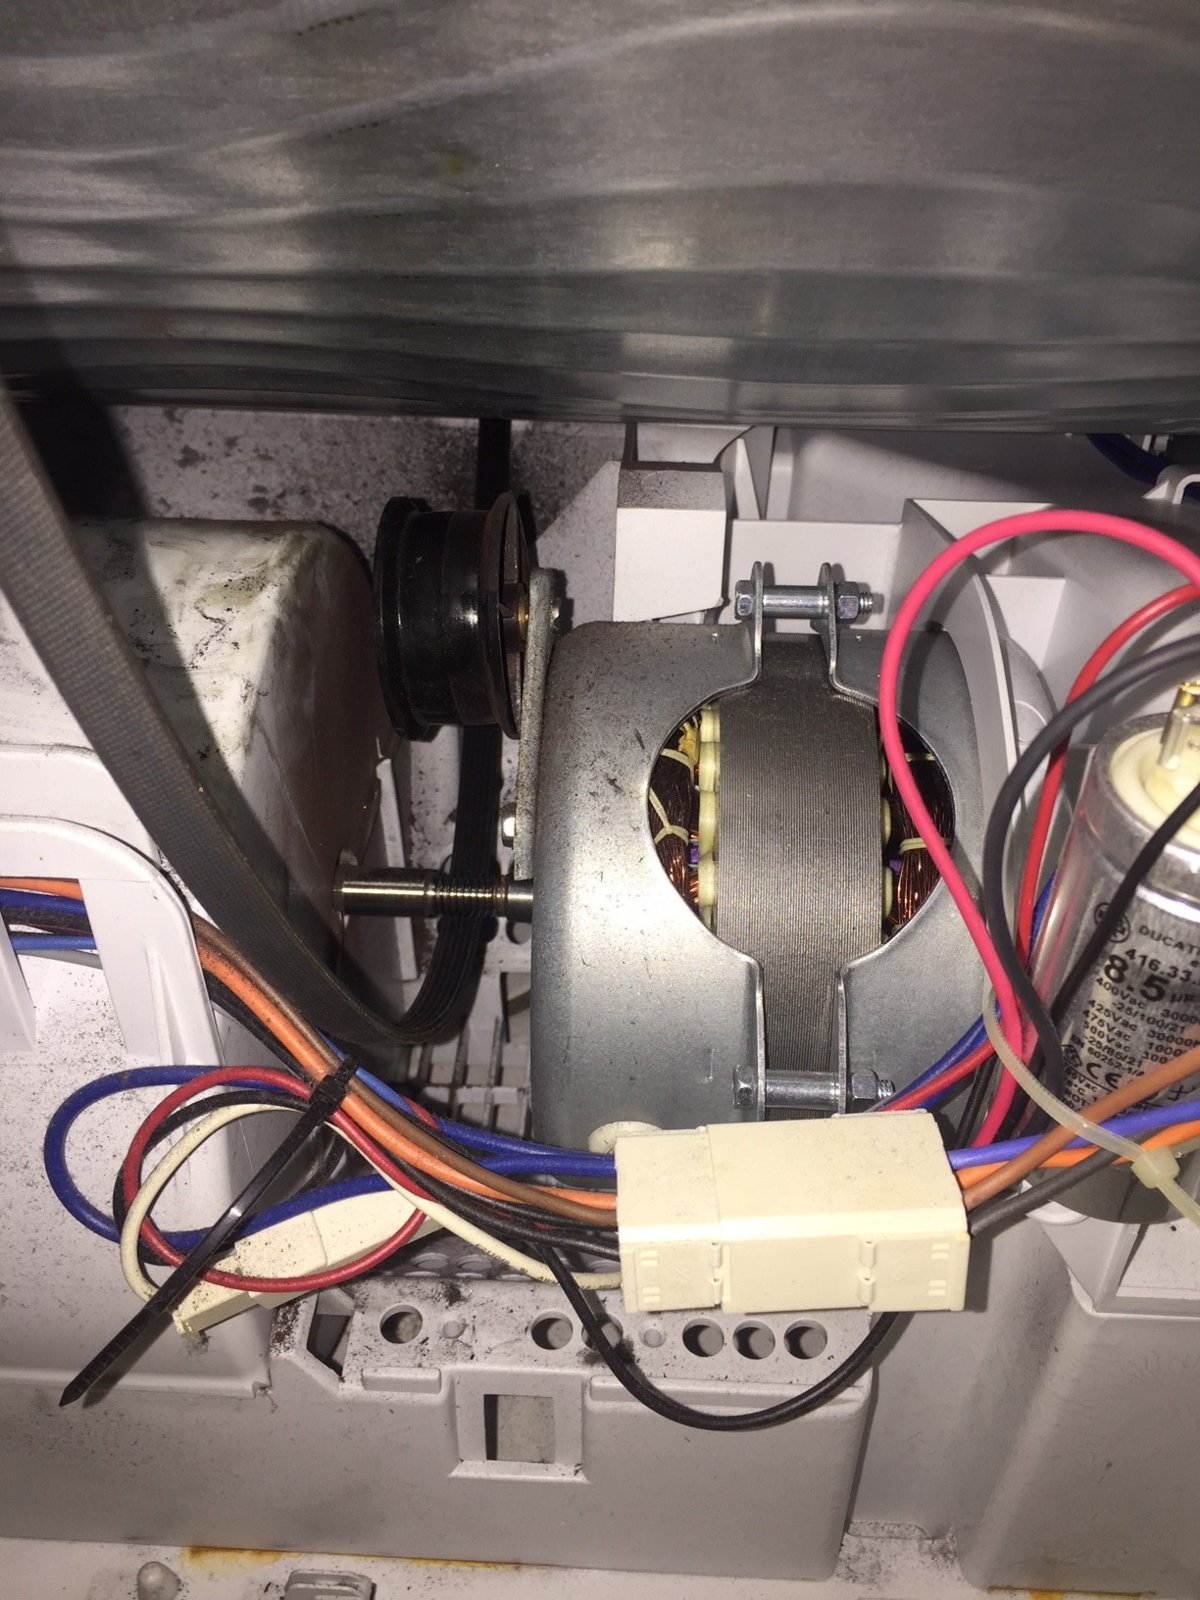 Condensing Dryer (drum not spinning) - Repair or buy new? | DIYnot Forums